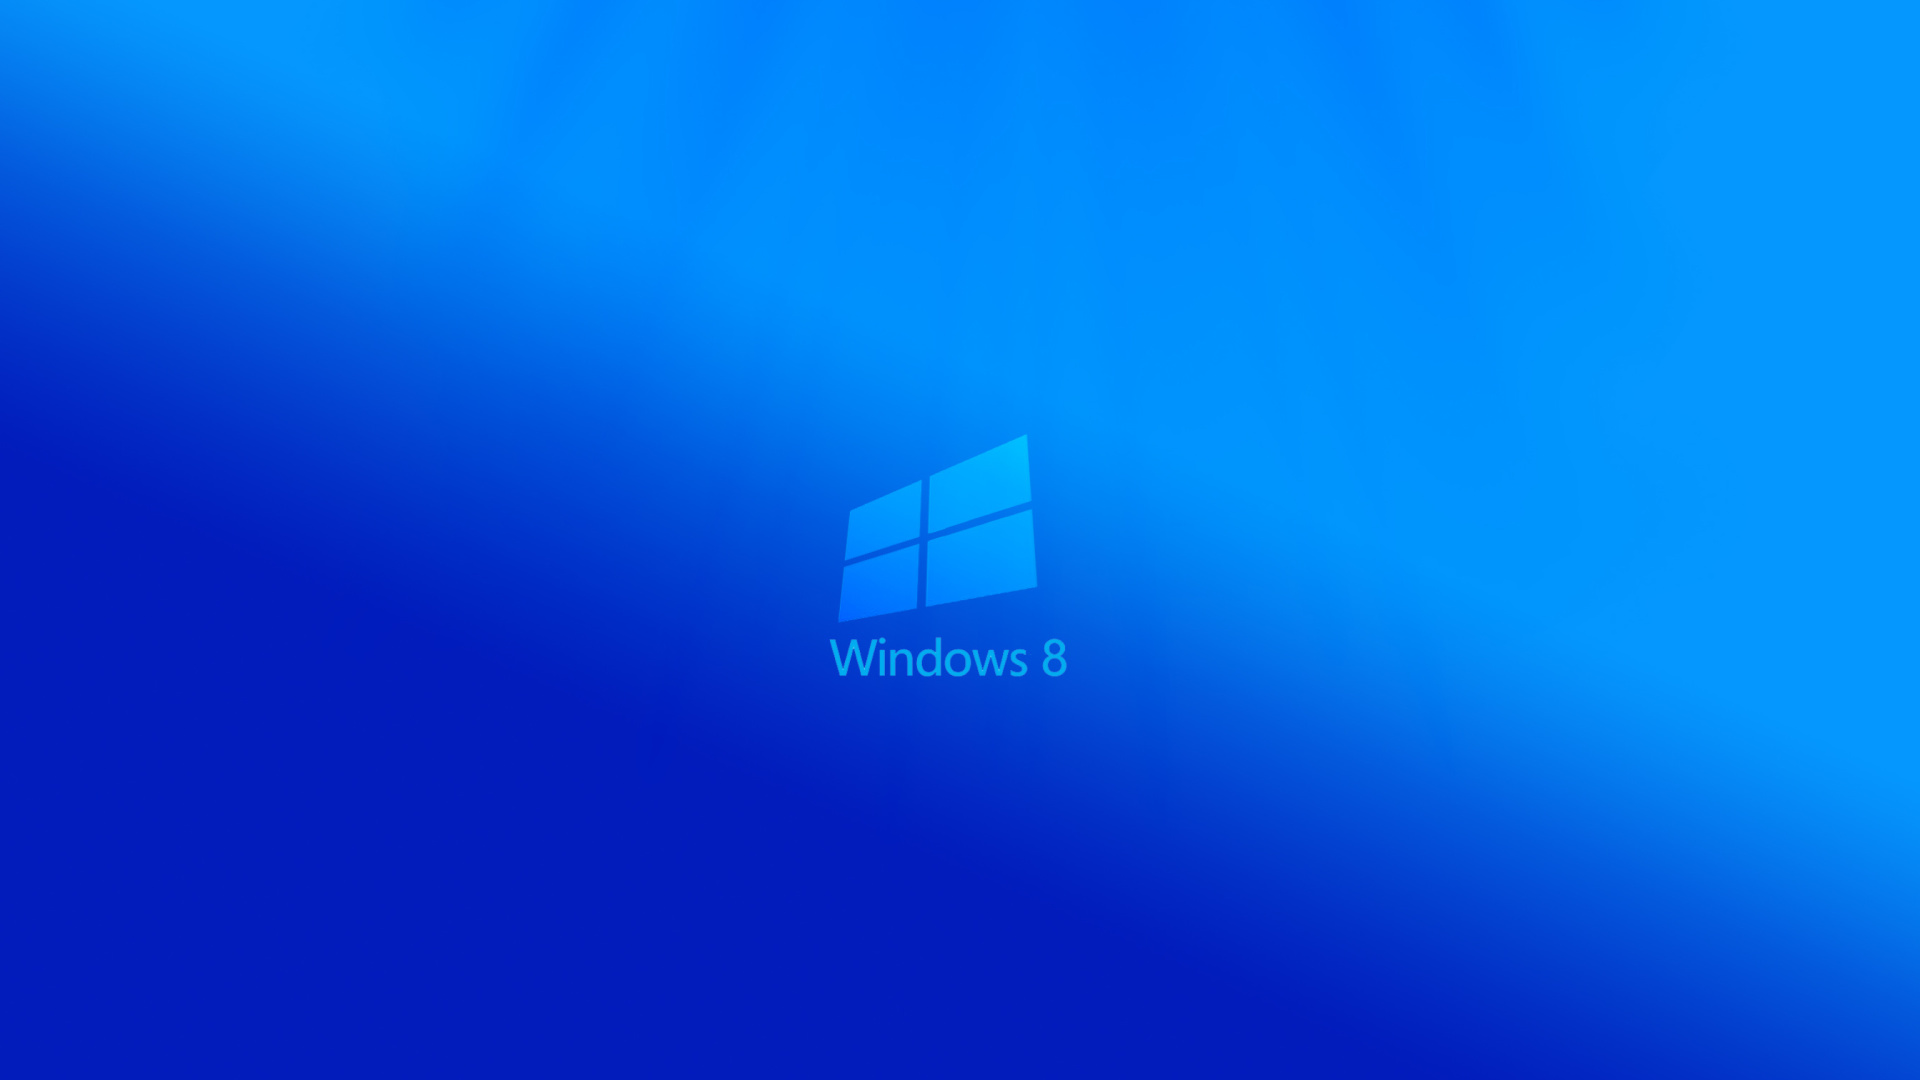 Windows 8 wallpaper 1920x1080